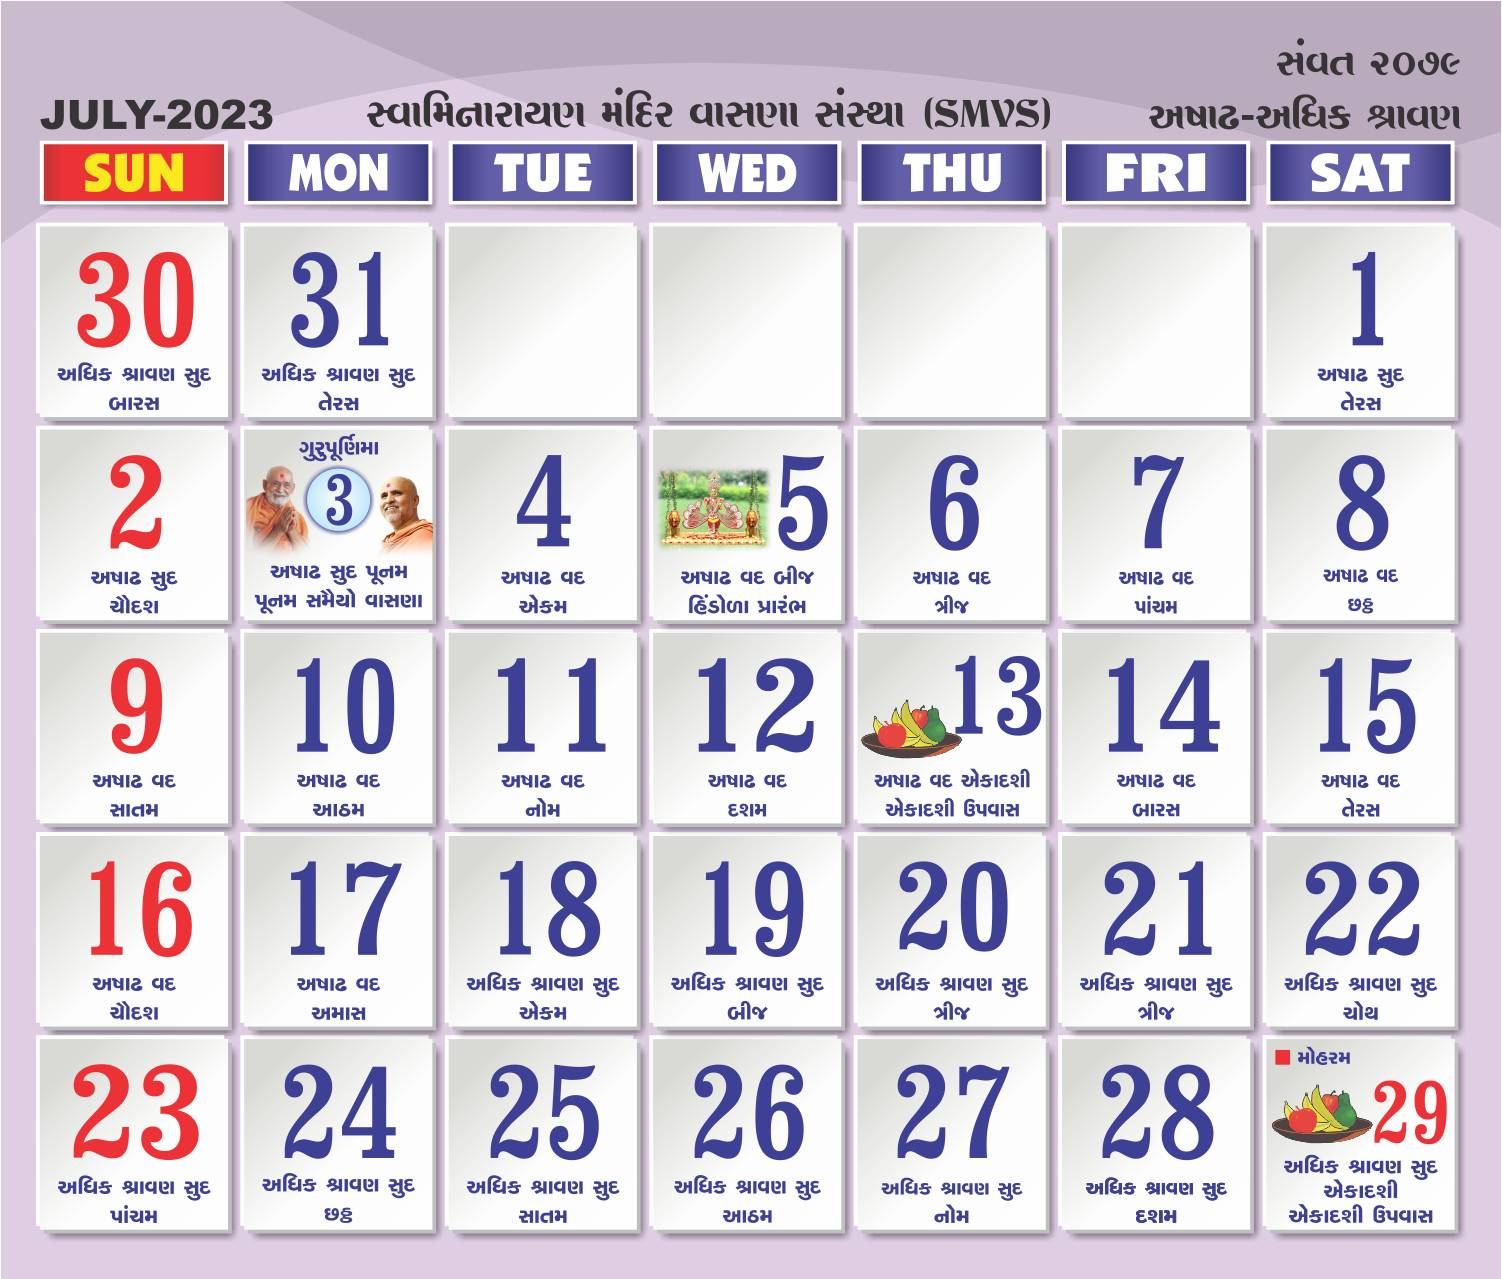 Swaminarayan Mandir Vasna Sanstha - Smvs | Baps Calendar 2024 July